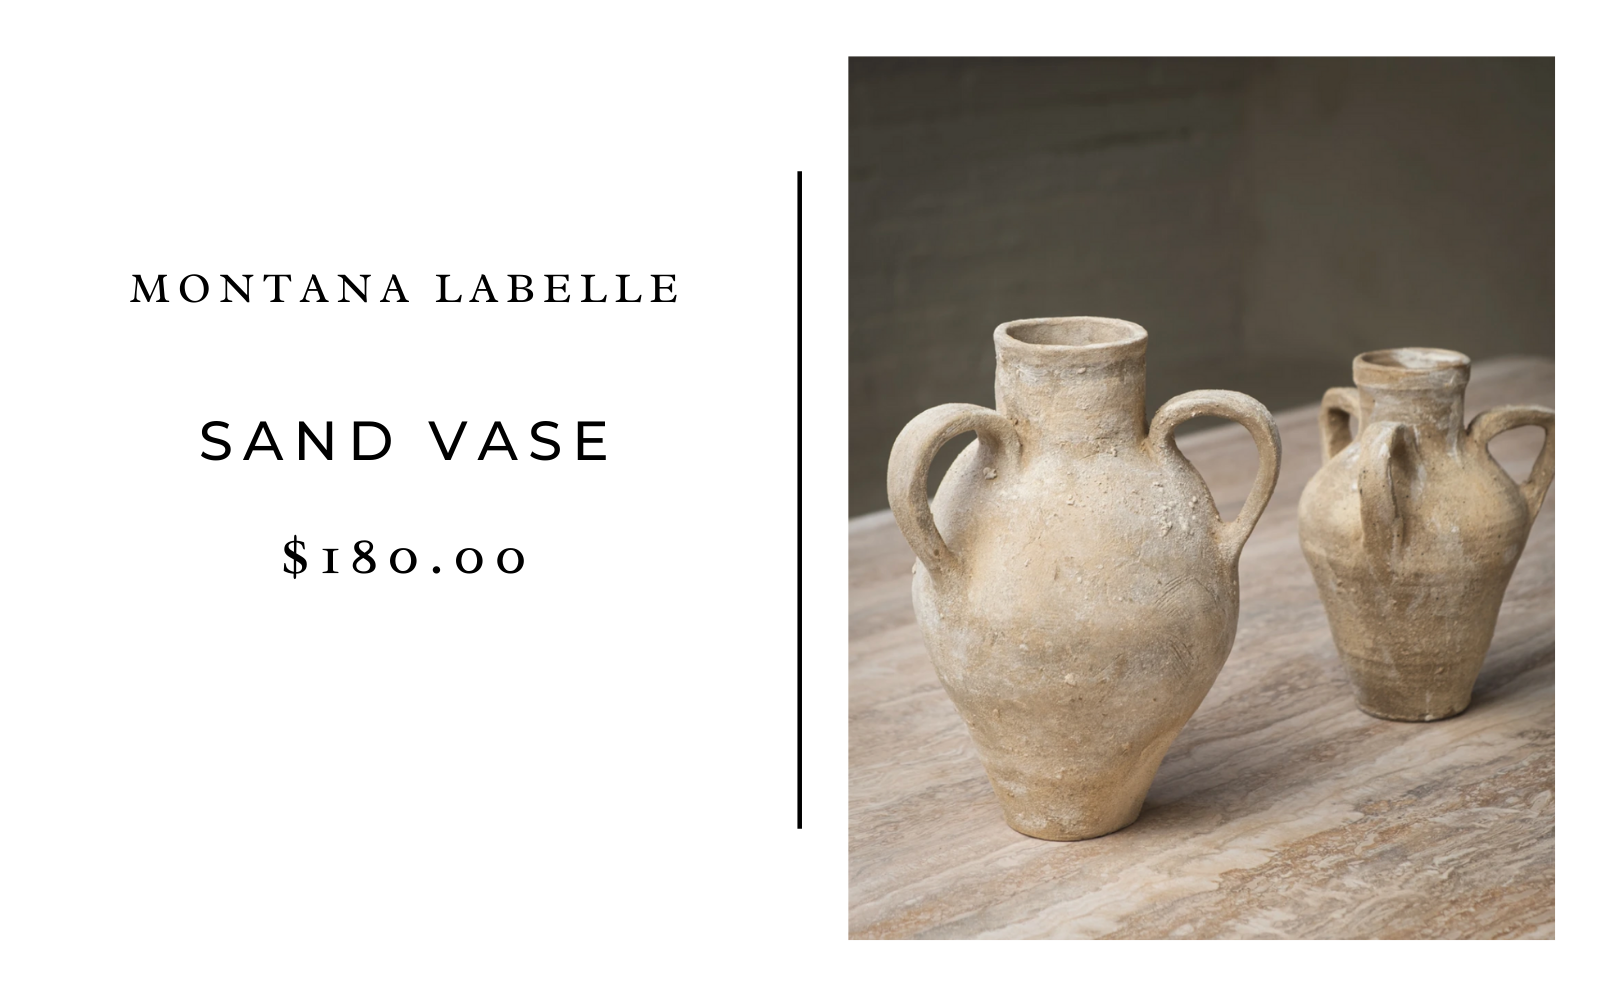 Montana Labelle Sand Vase